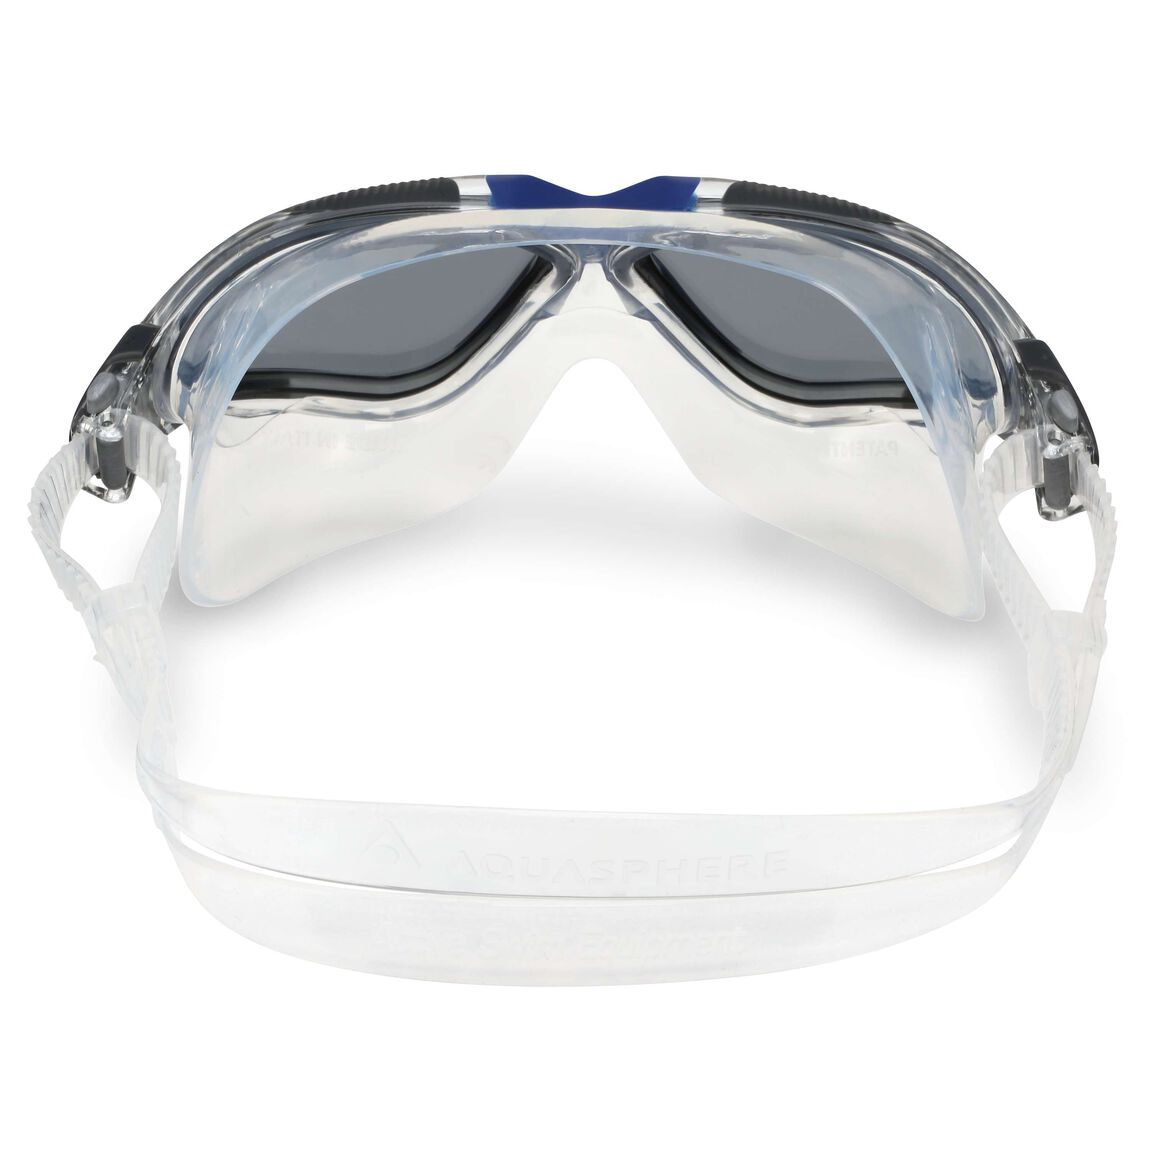 Aquasphere Vista Swim Mask - Transparent/Dark Grey